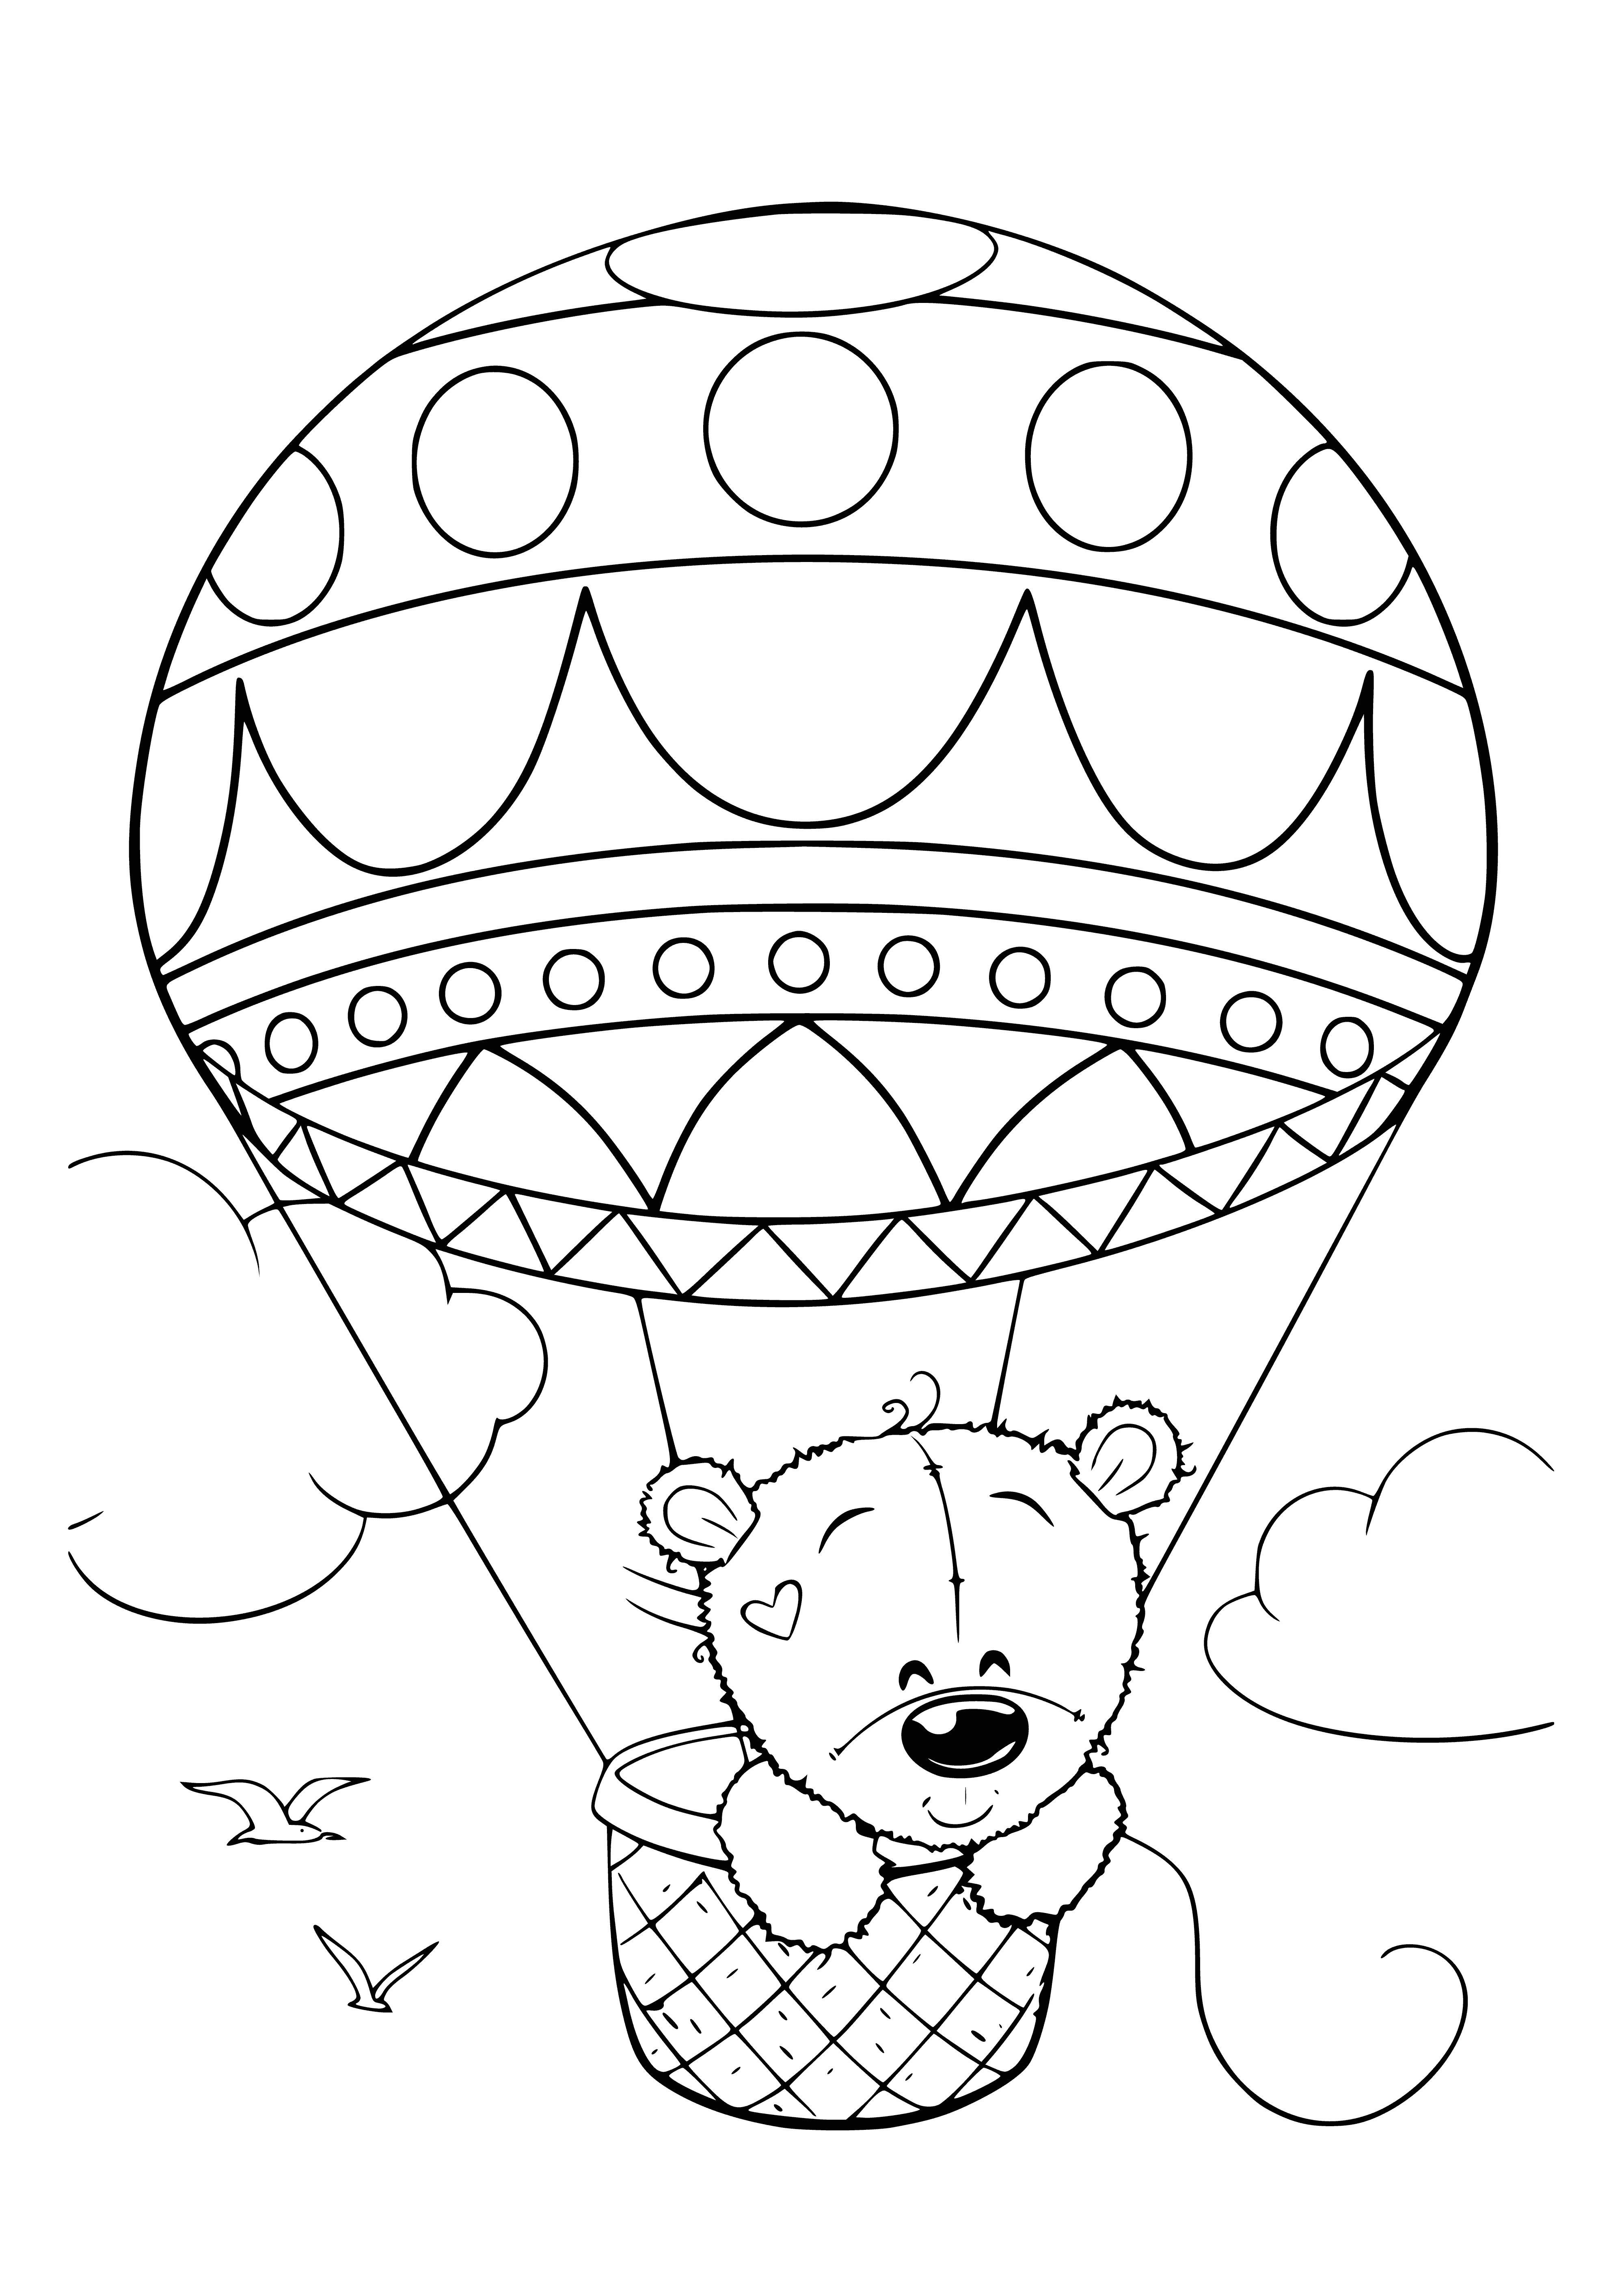 Balloon bear coloring page